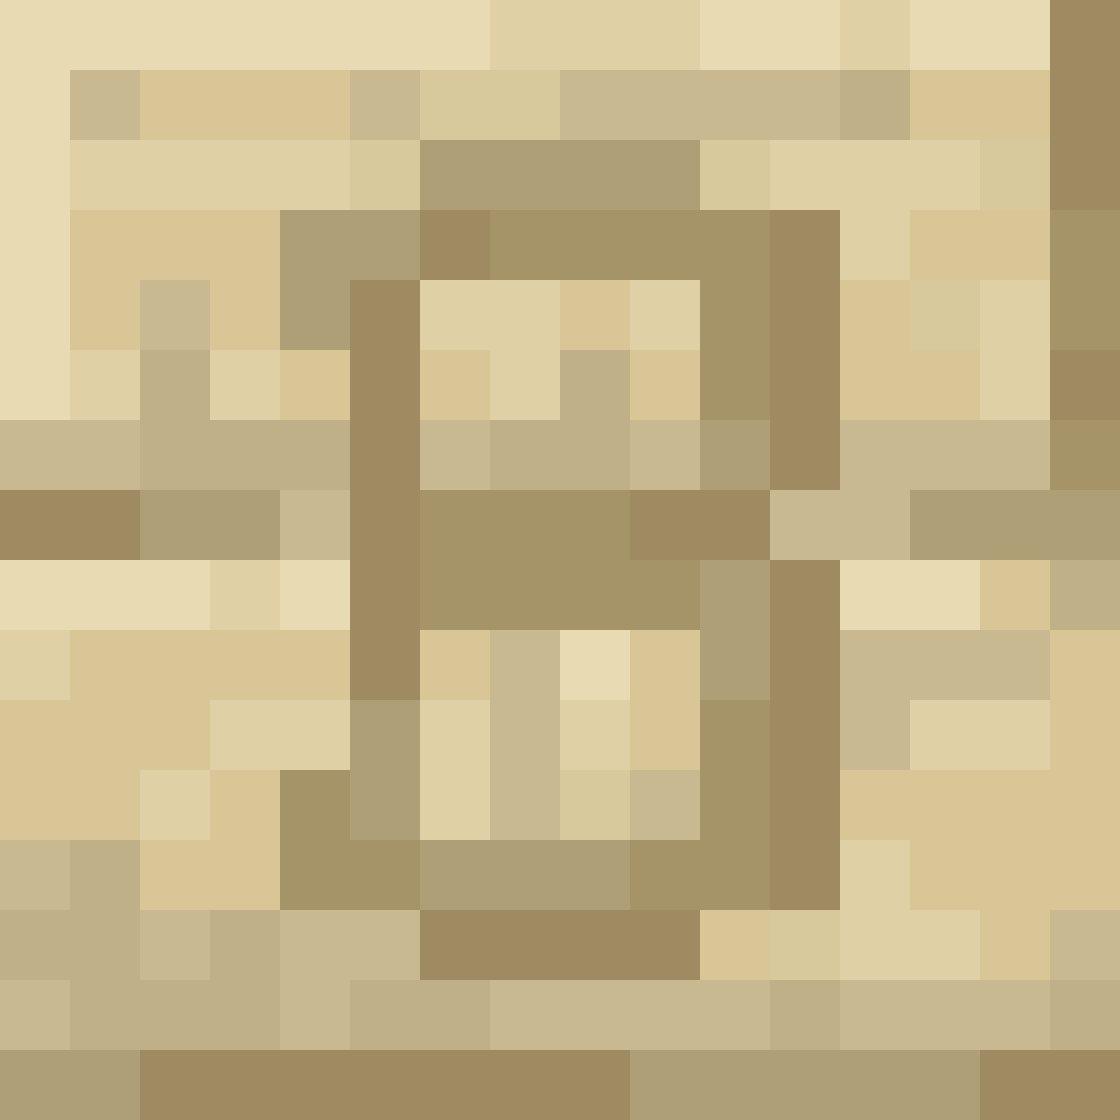 Better Sandstone TAC Screenshots - Resource Packs - Minecraft